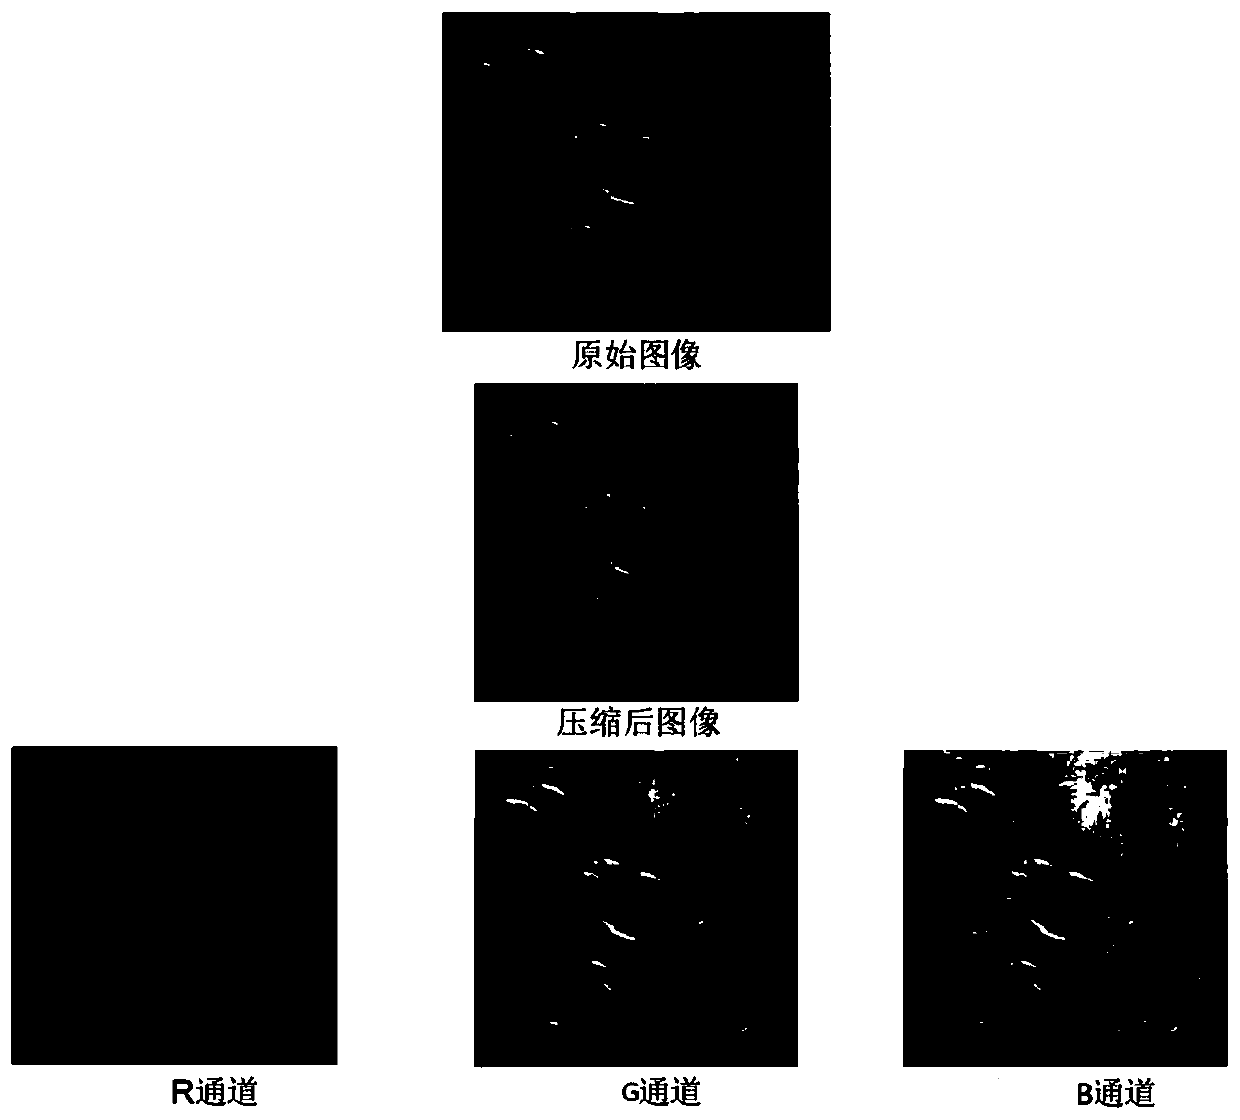 Underwater image enhancement method for optimizing CLAHE